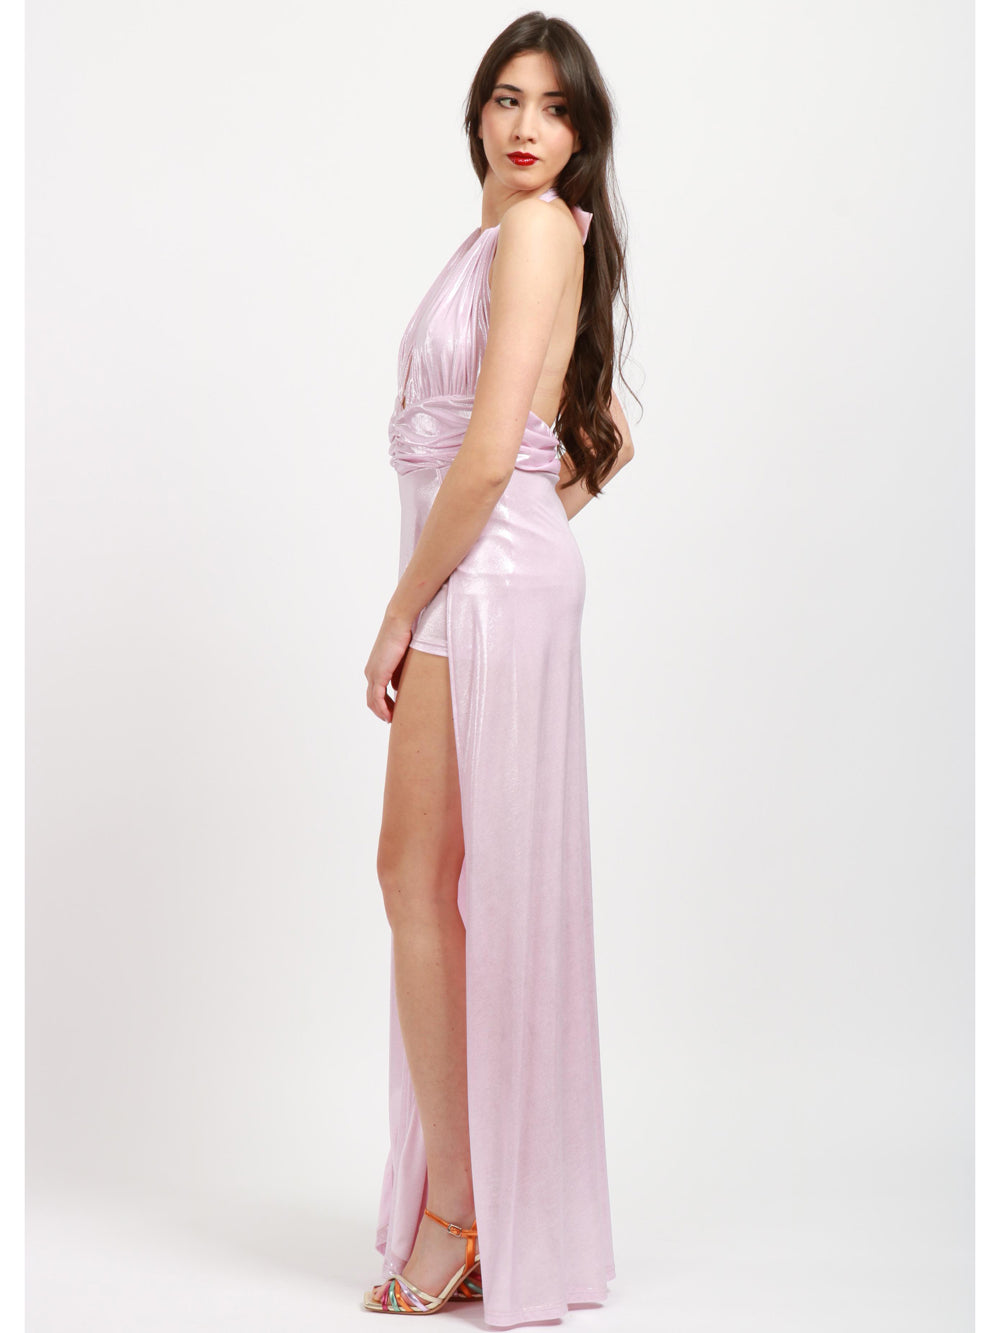 Eluard Long Pink Dress with Side Slits